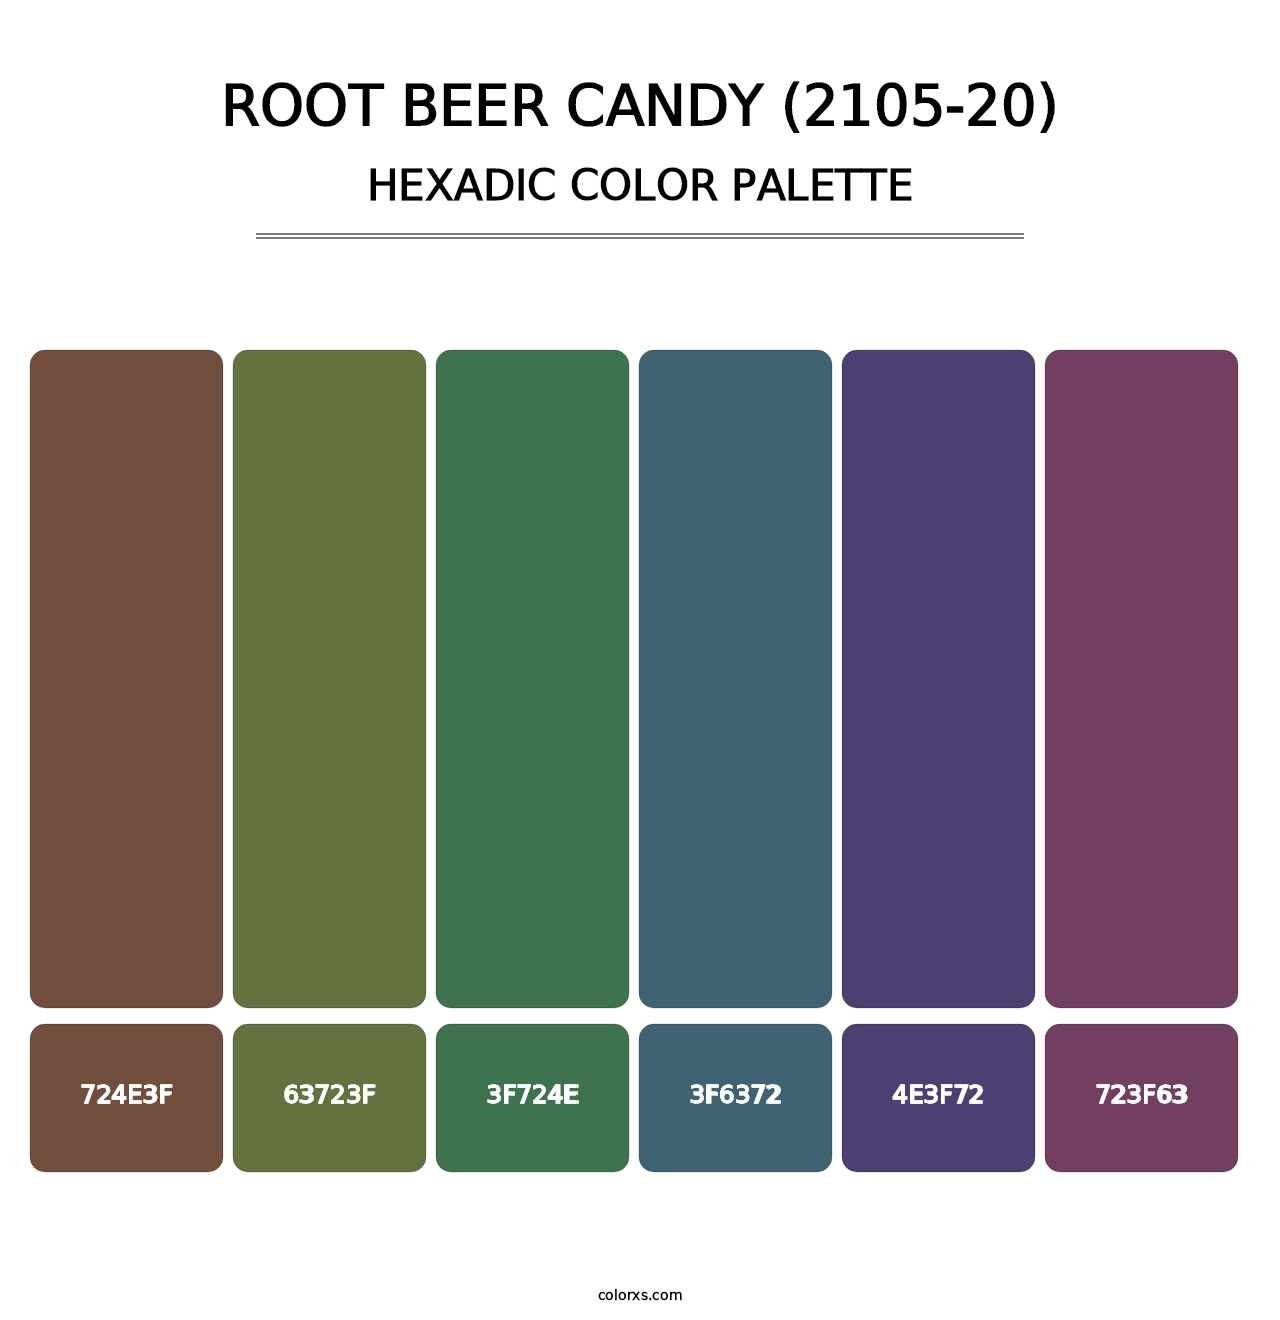 Root Beer Candy (2105-20) - Hexadic Color Palette